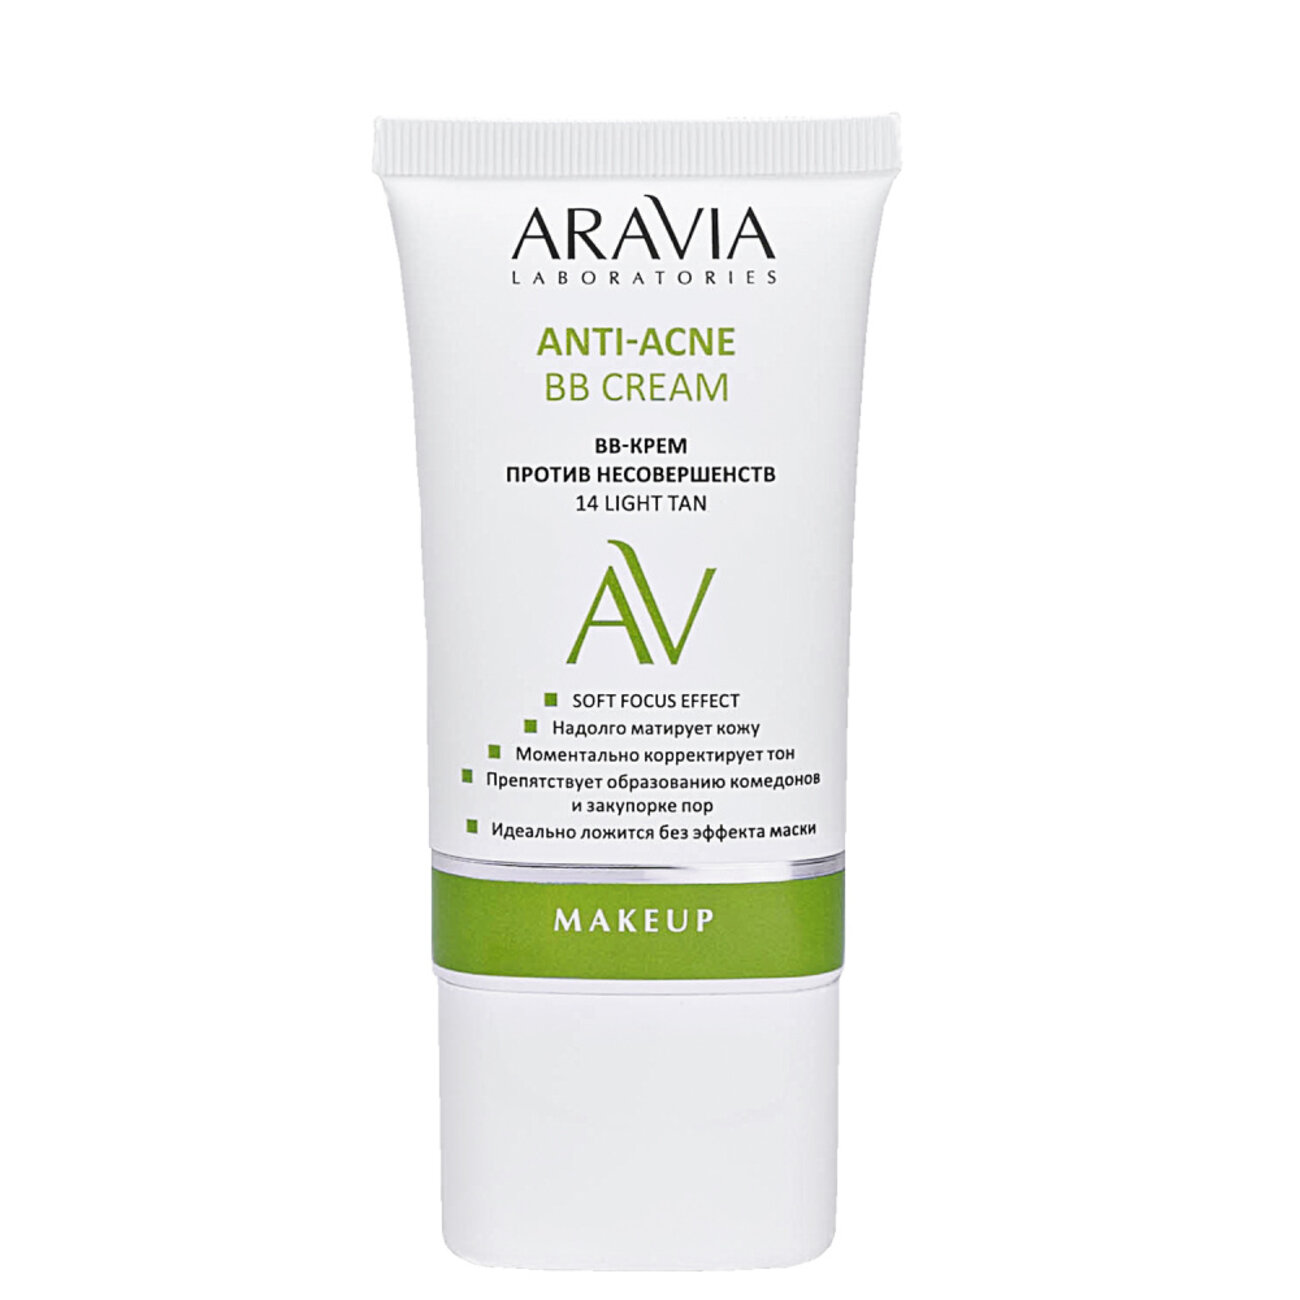 406591 ARAVIA Laboratories " Laboratories" BB-крем против несовершенств 14 Light Tan Anti-Acne BB Cream, 50 мл